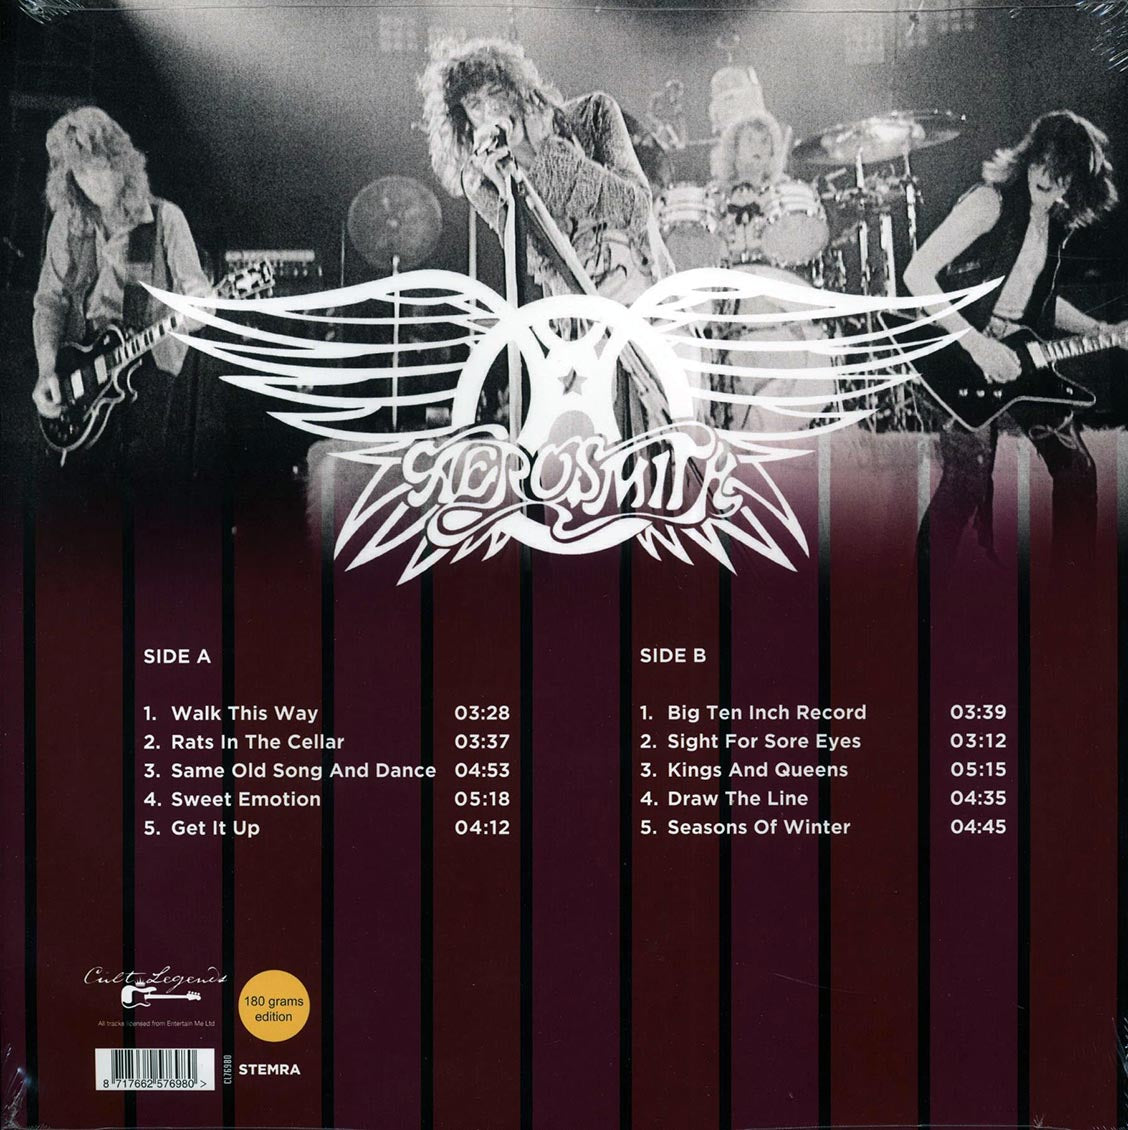 Aerosmith - Live: Recorded At The Music Hall, Boston, 28th March, 1978 - Vinyl LP, LP